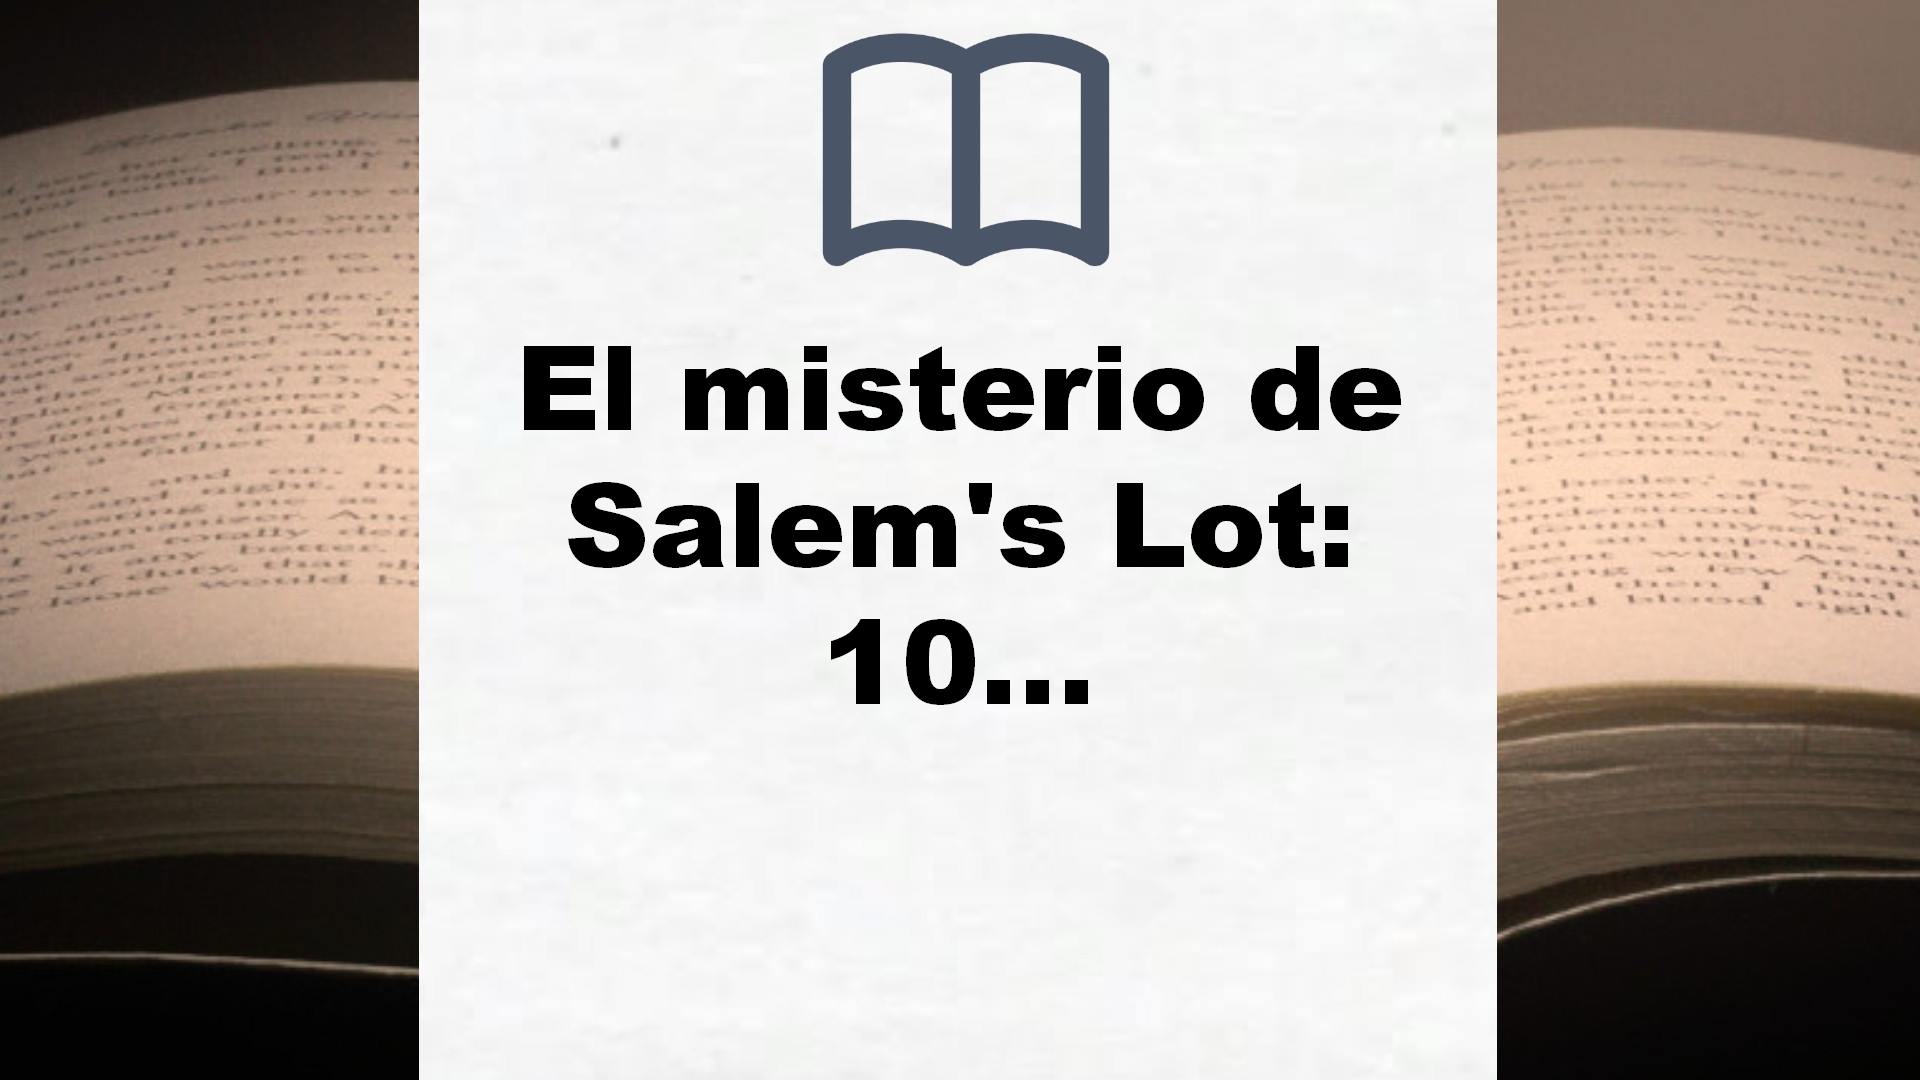 El misterio de Salem’s Lot: 102 (Best Seller) – Reseña del libro